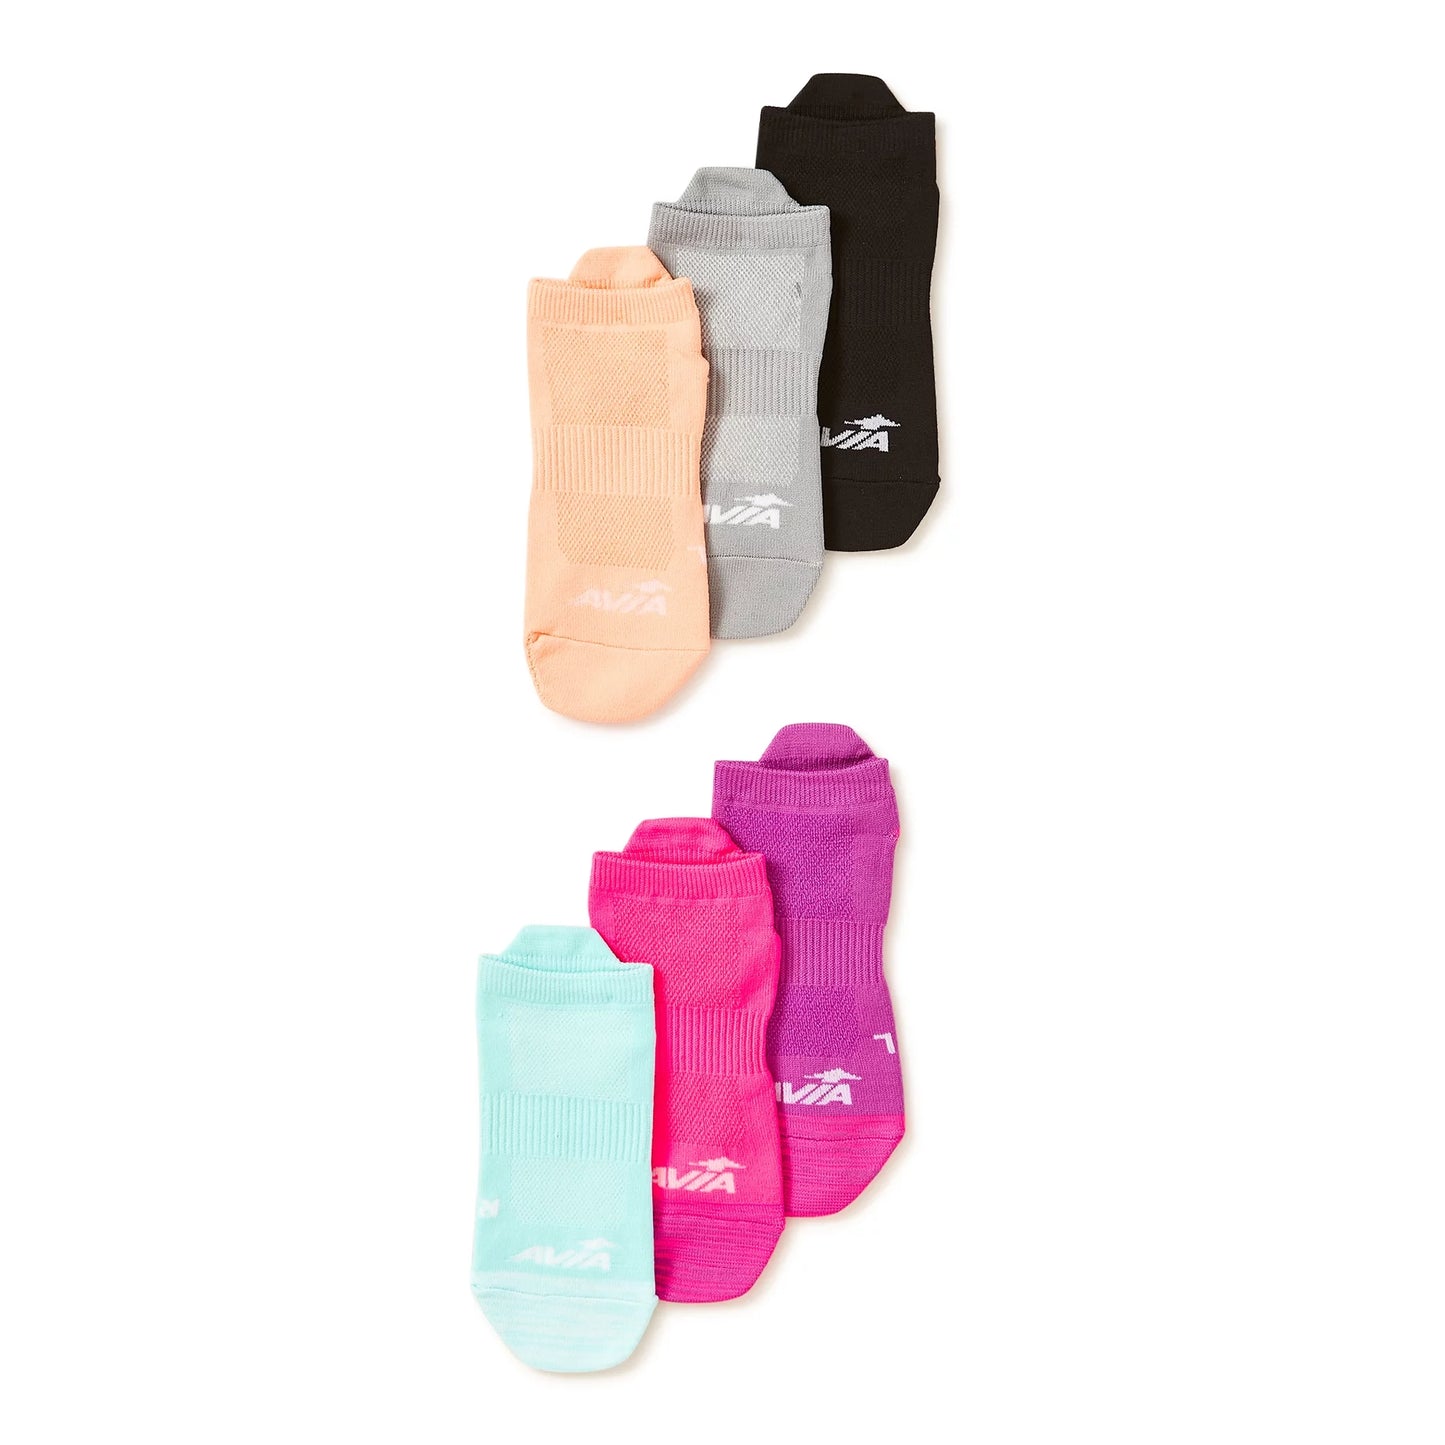 Avia Women's Premium Lightweight Low Cut Socks, 6-Pack